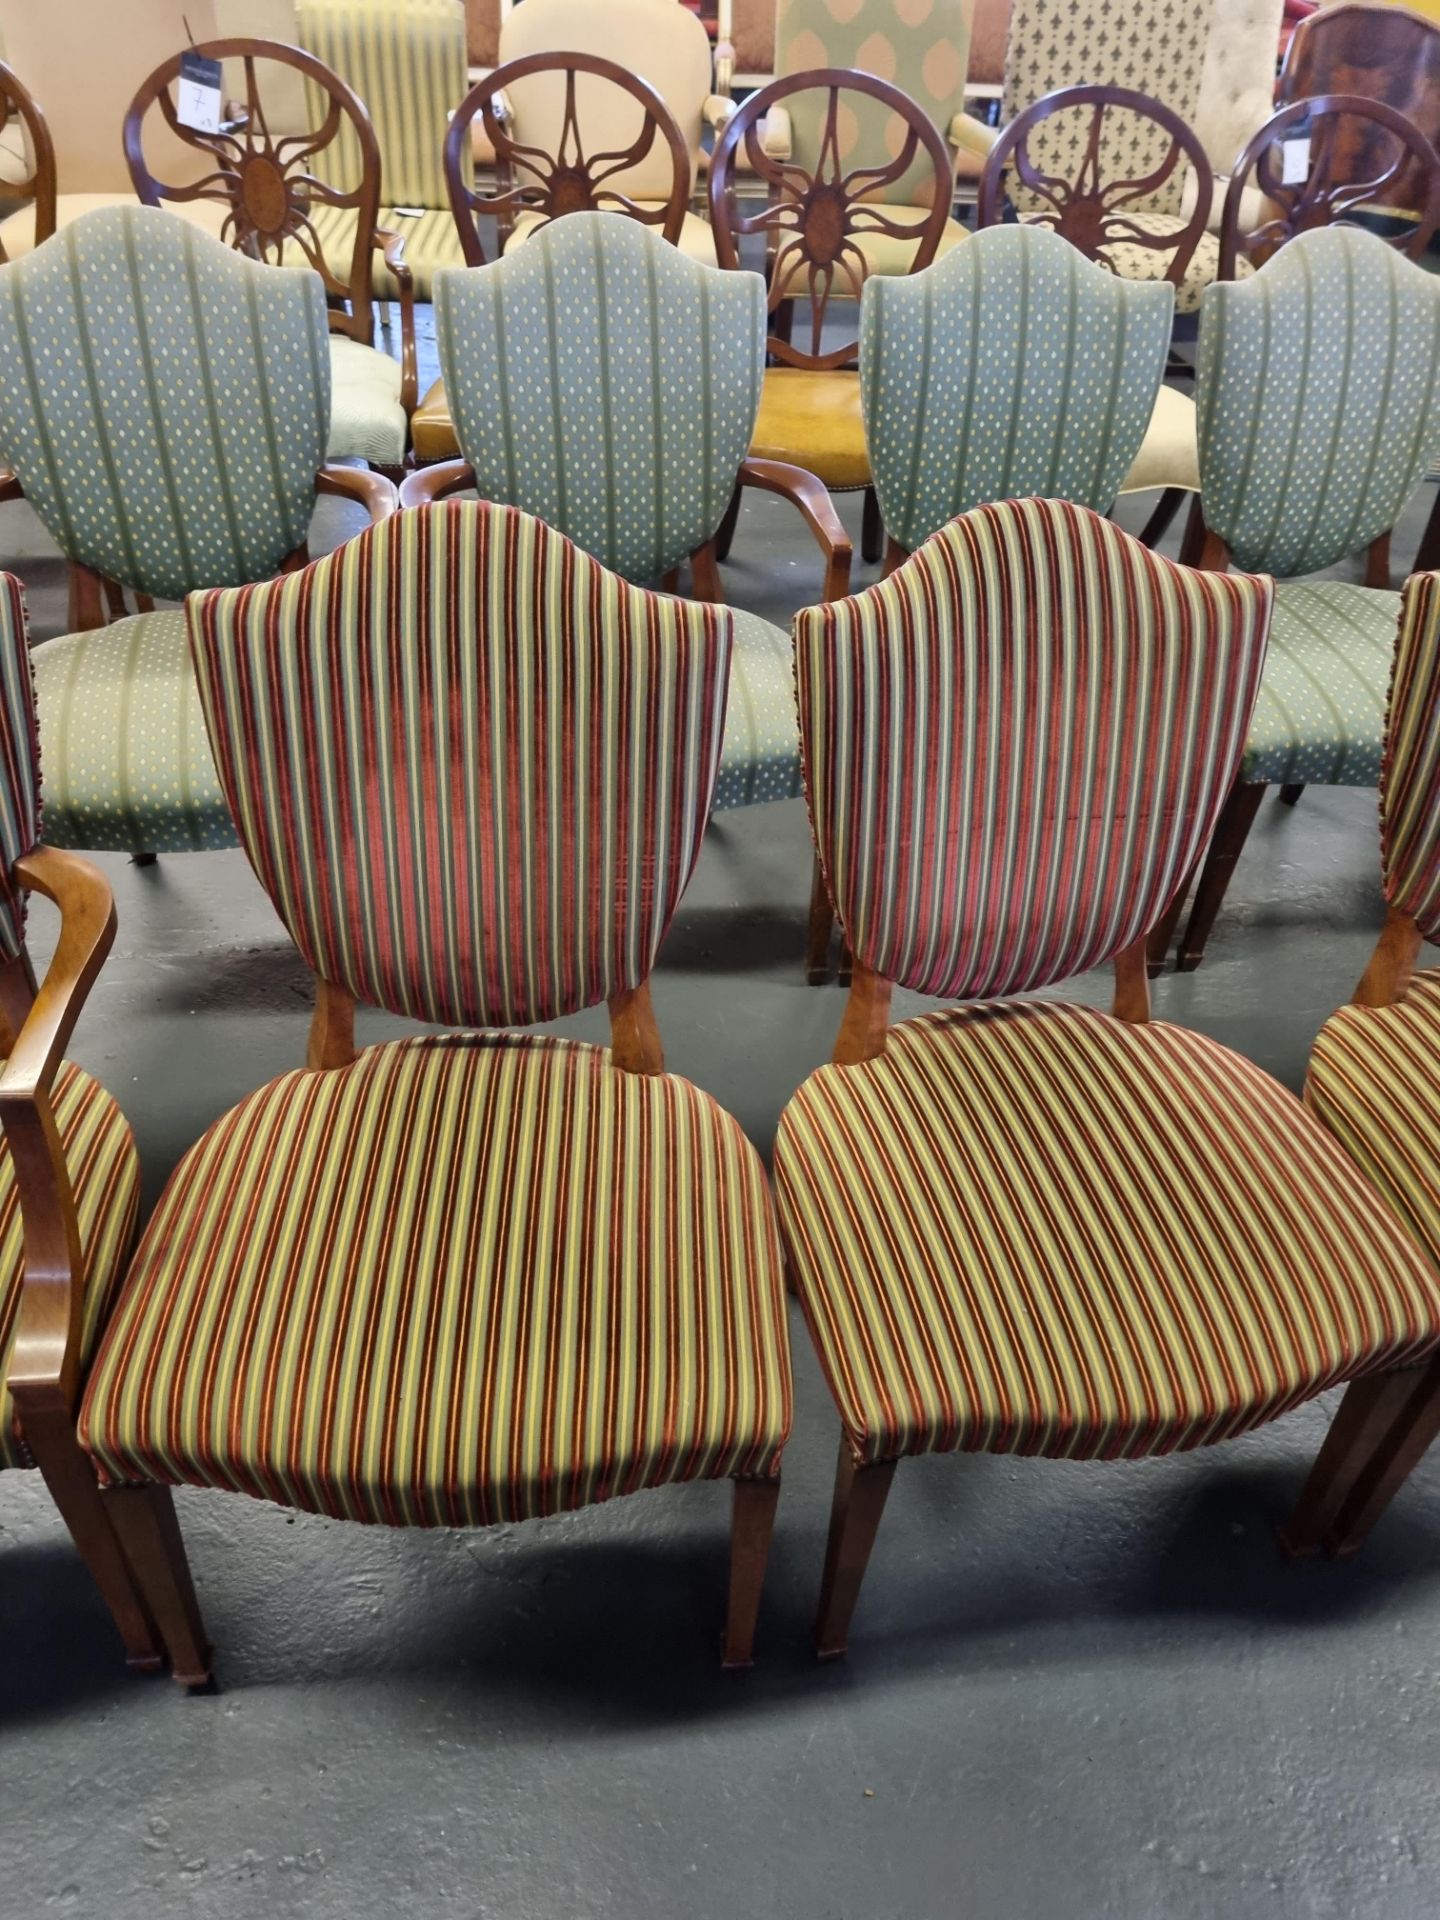 7 X Arthur Brett Upholstered Shield Back Chairs In Green/Red/Gold Stripe Bespoke Upholstery The - Image 3 of 5